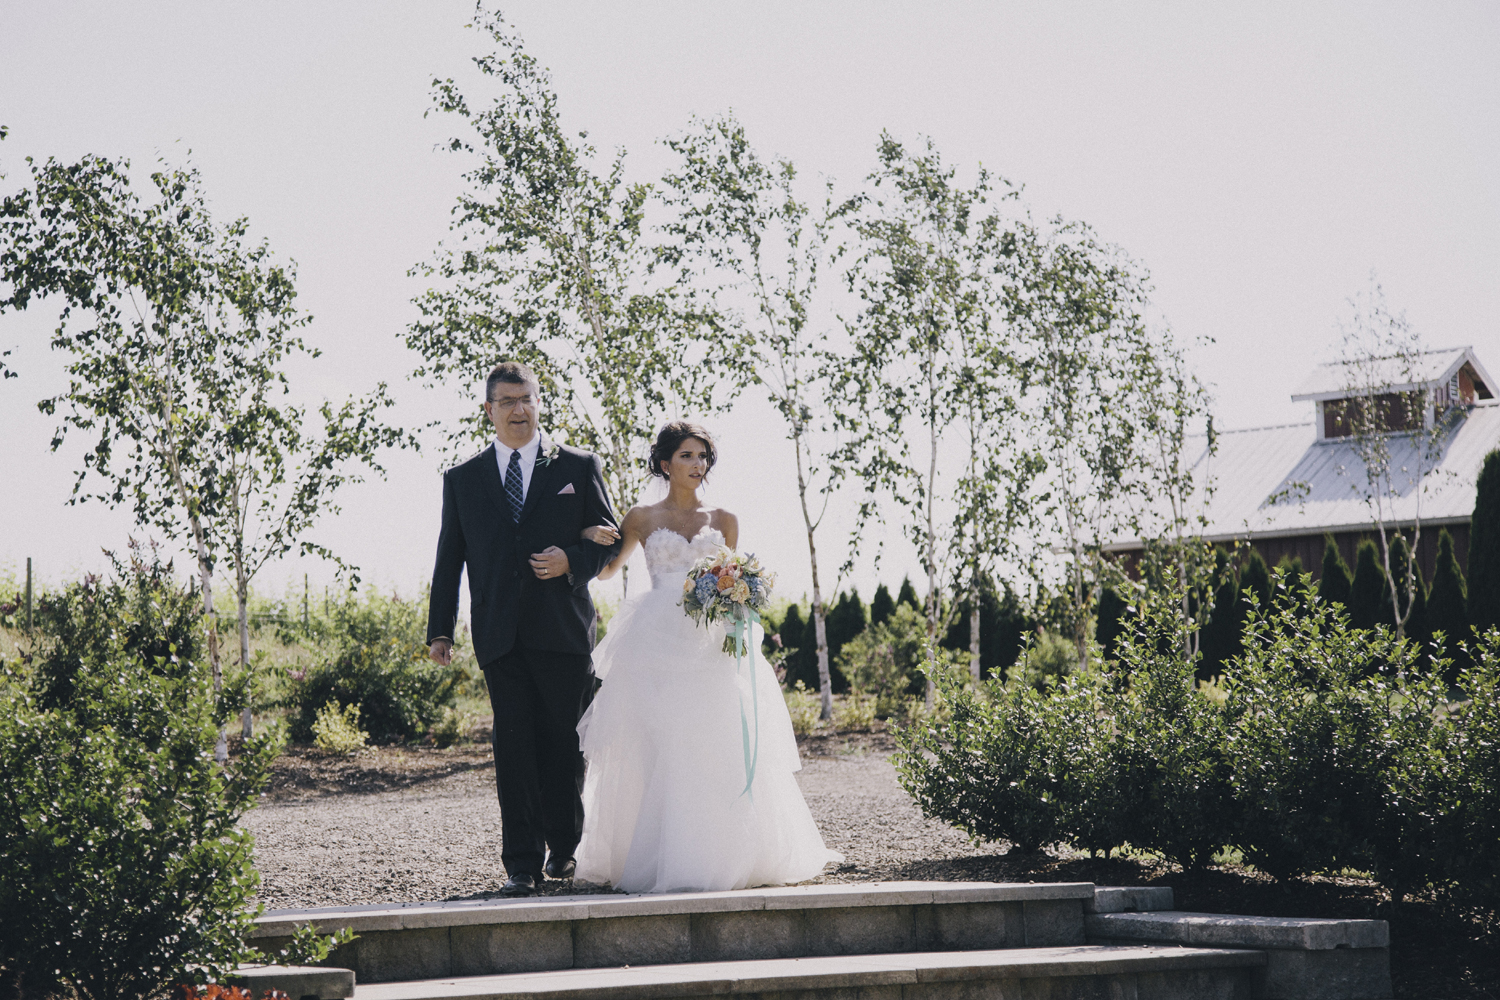 Bridalbliss.com | Portland Wedding | Oregon Event Planning and Design | Kira + Matt Photography | Alpine Productions